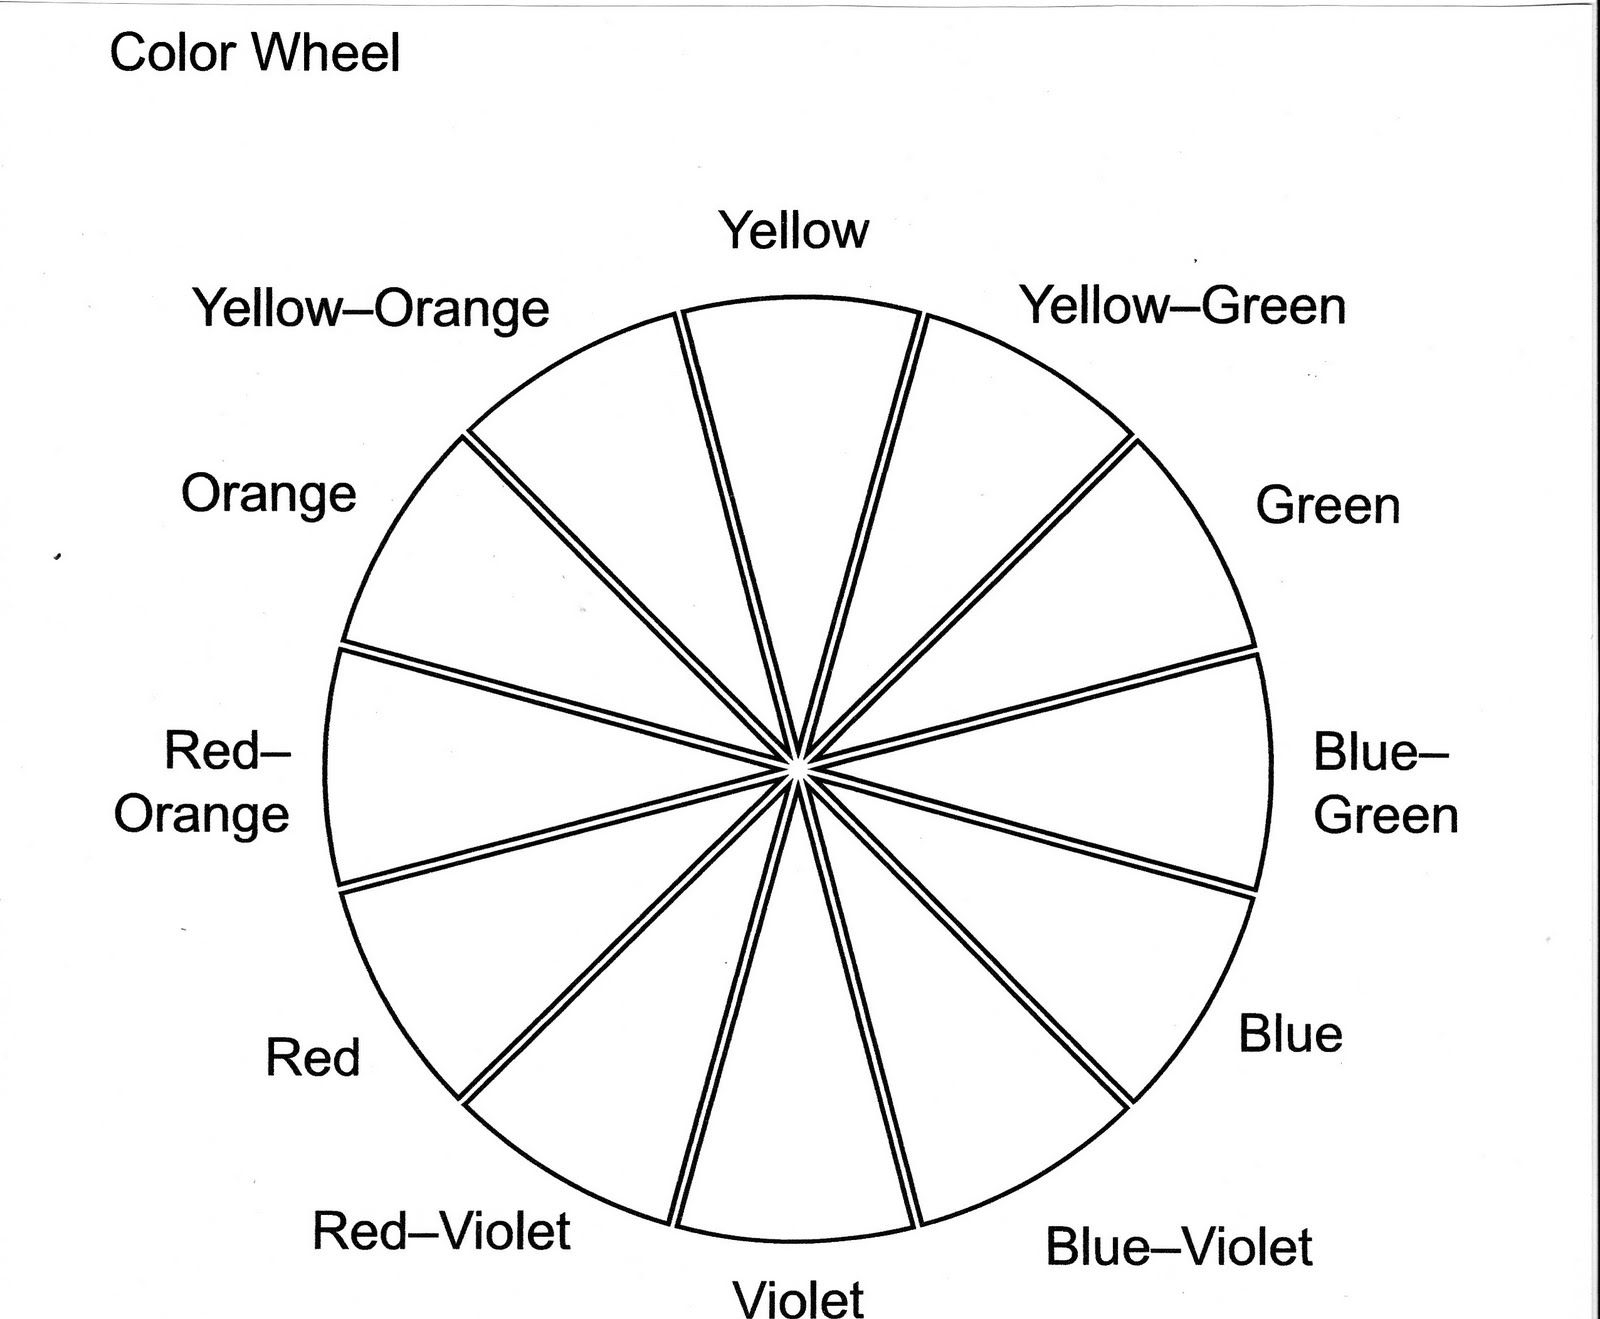 Color Wheel Worksheet Printable | Life Skills In 2019 Within Blank Color Wheel Template